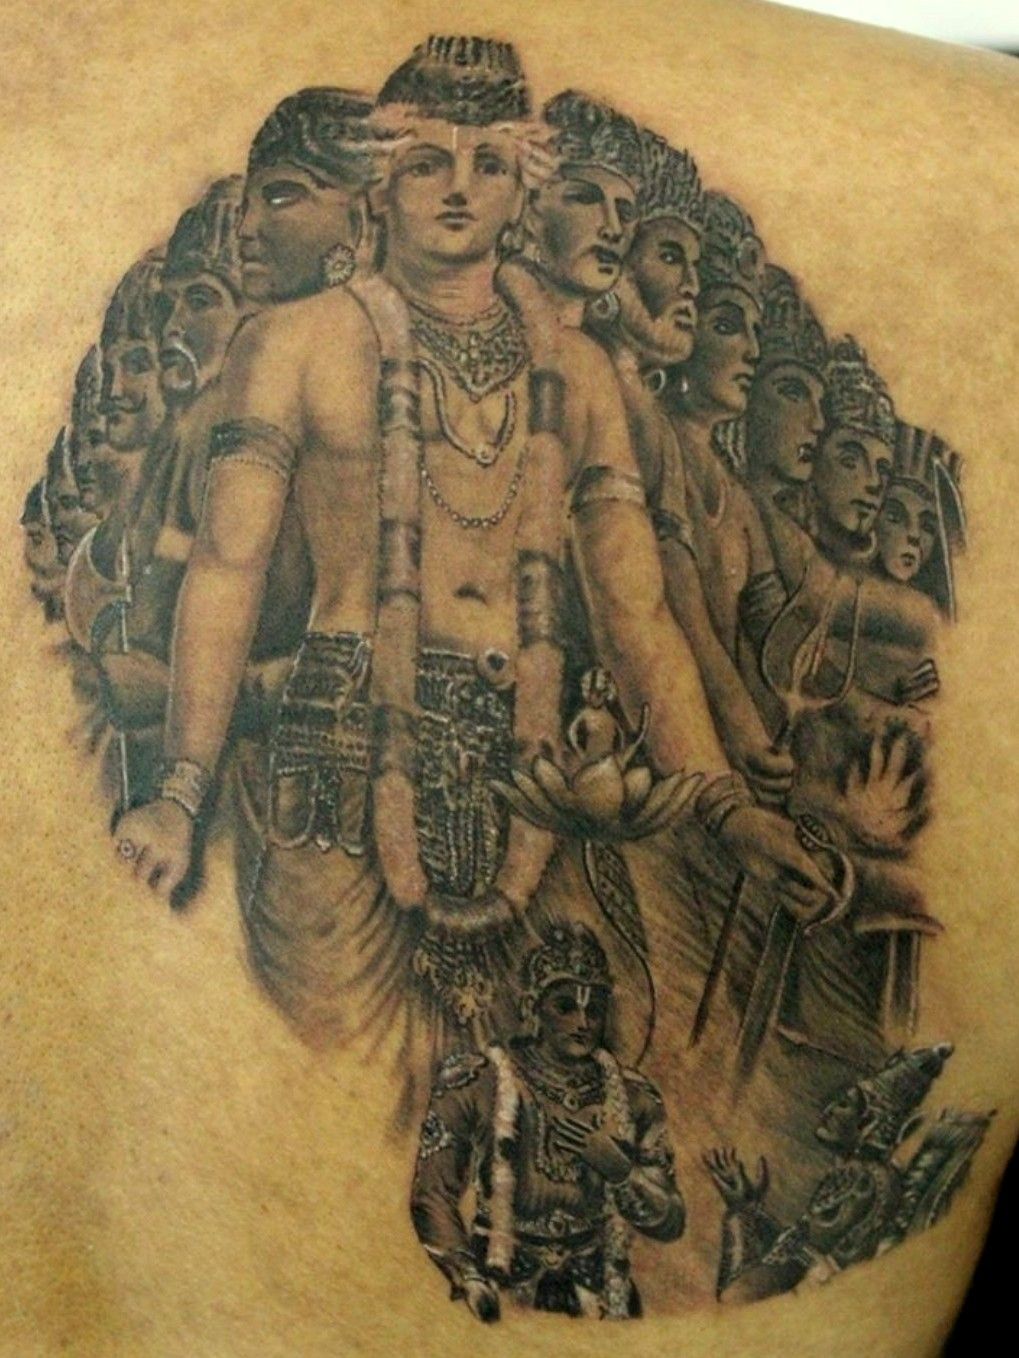 Tattoo uploaded by Mr Tattooholic Ahmedabad  Any Tattoo  Piercing inquiry   Call 9558126546 DM for free consultation Whatsapp 9558126546   Mrtattooholic111gmailcom karnatattoo karna karnamahabharat mahabharat  arjuna krishna 